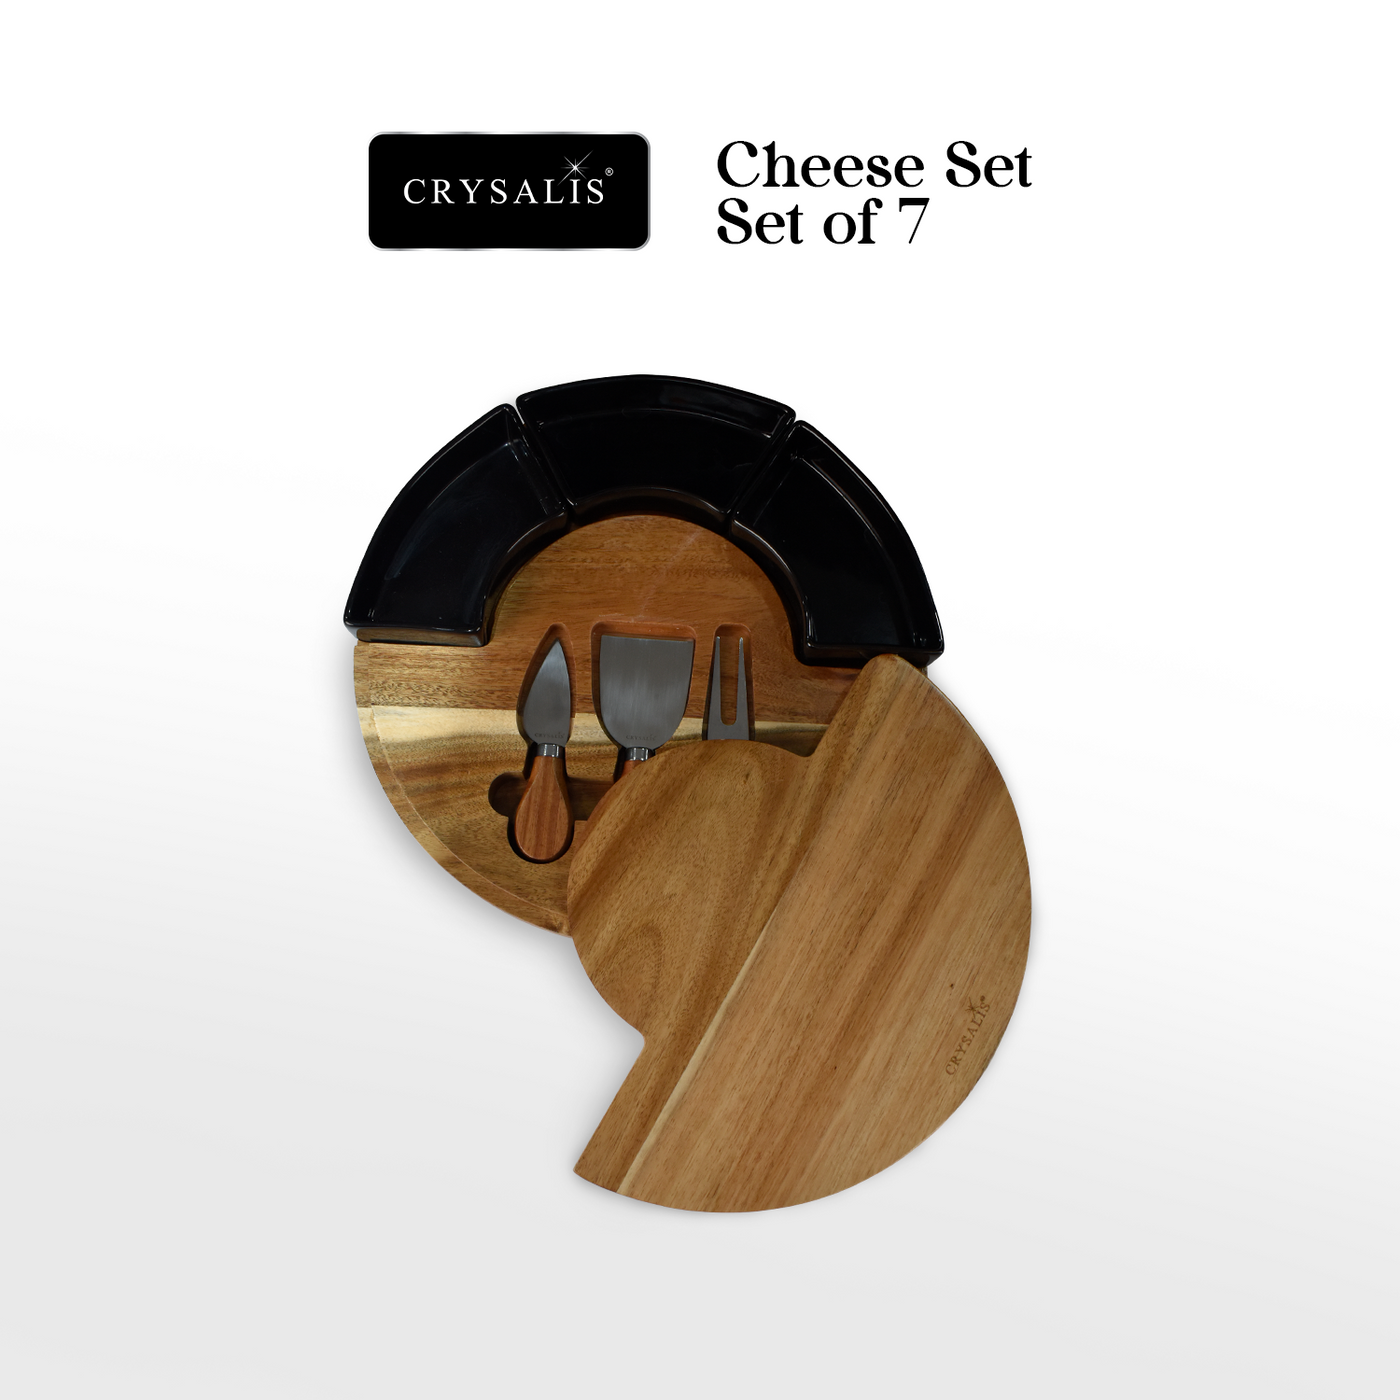 CRYSALIS Premium Cheese Set Cheese Board, Charcuterie [Set of 5/Set of 7] - Acacia Wood